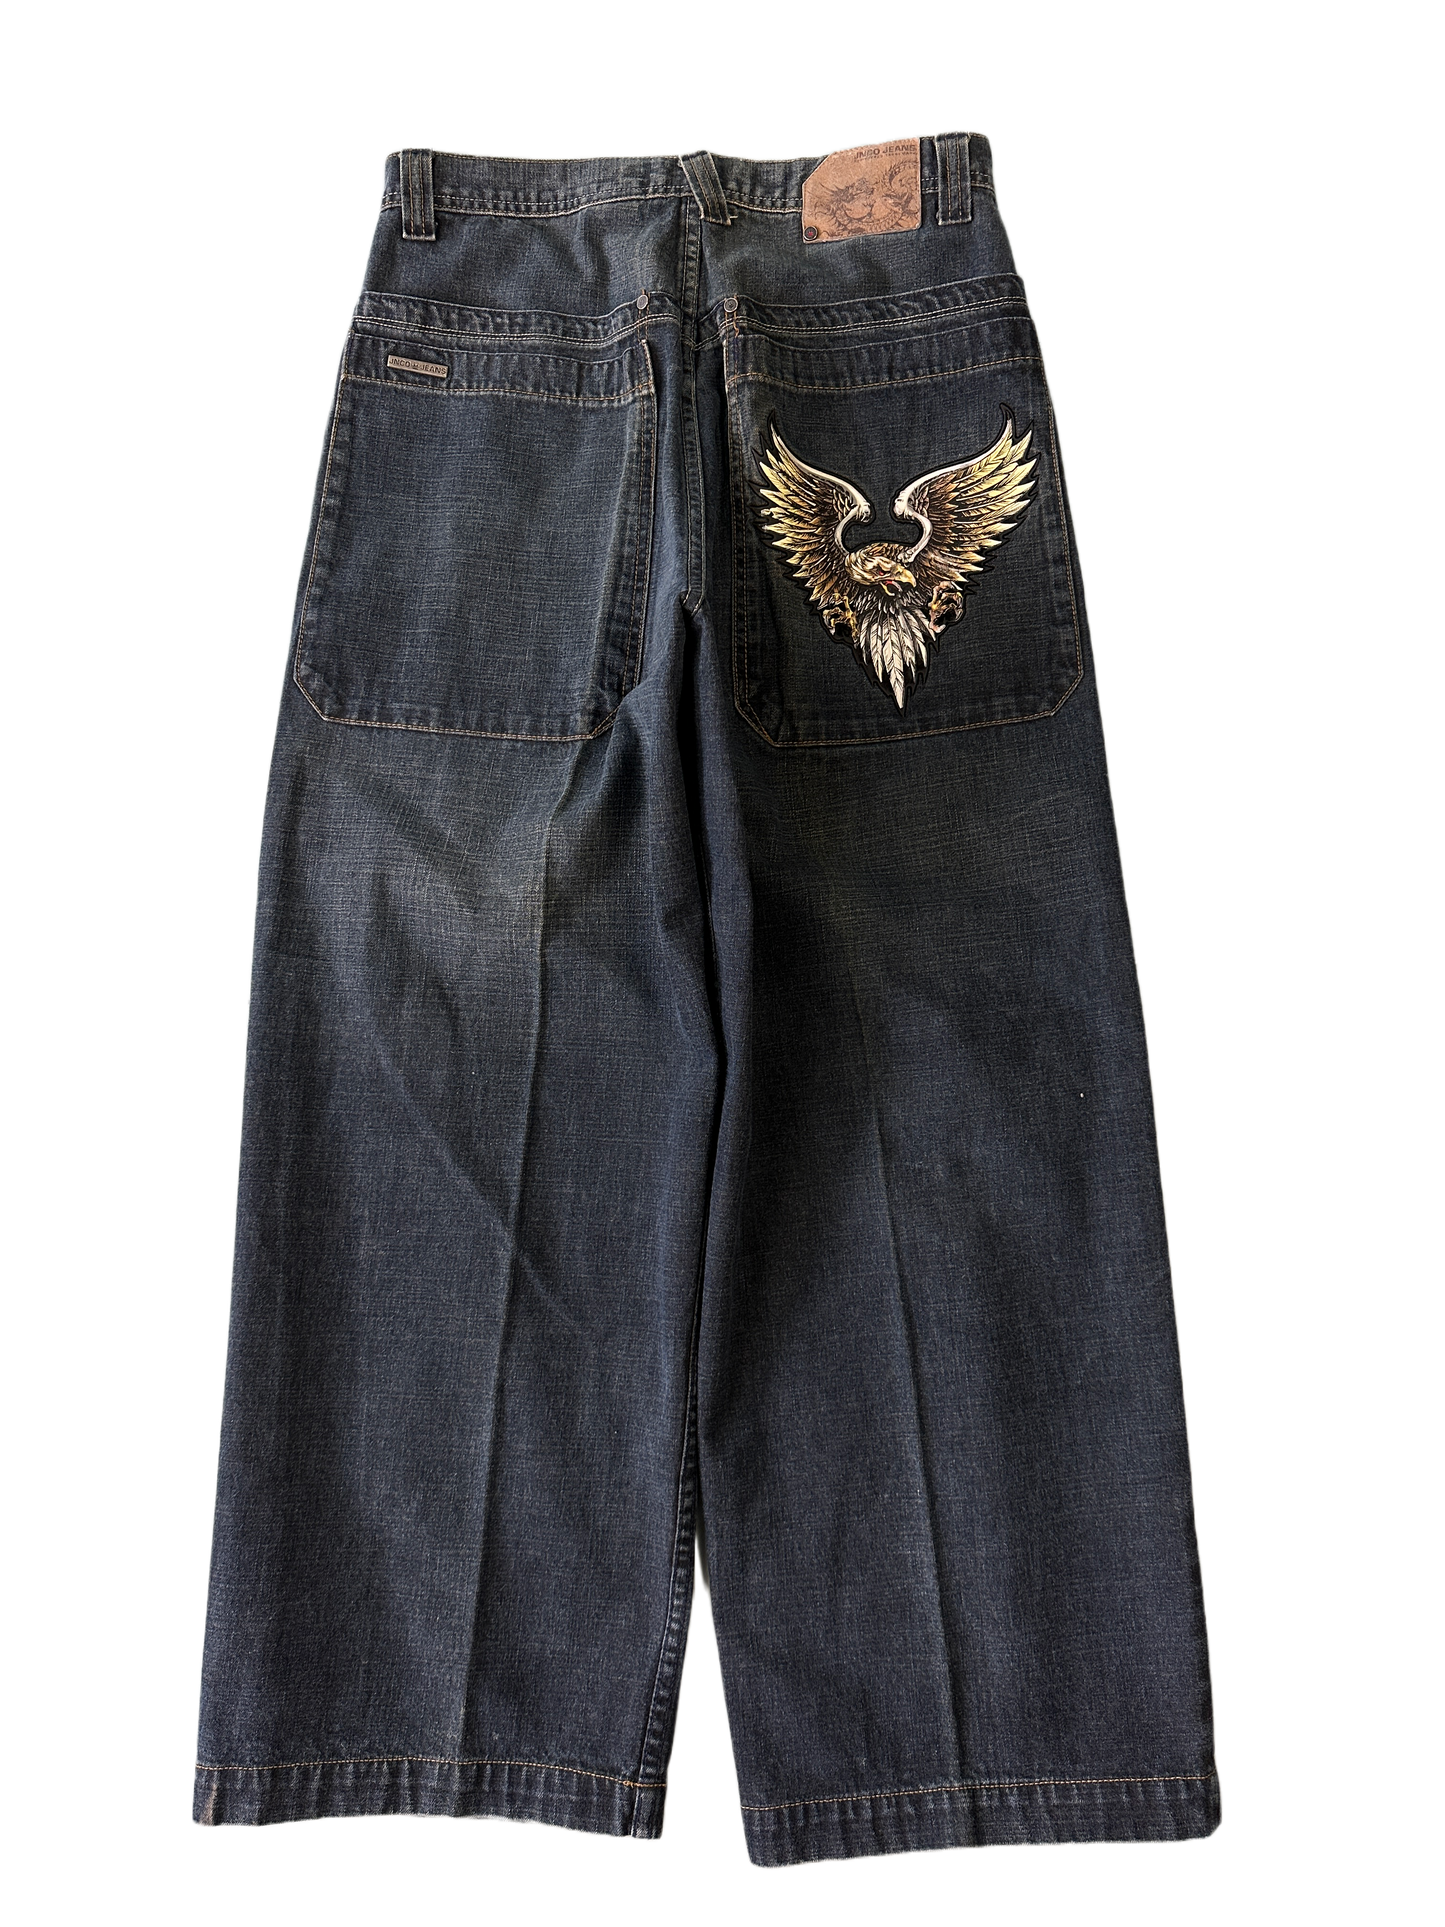 JNCO Eagle Vintage Baggy Jeans - 34 x 30